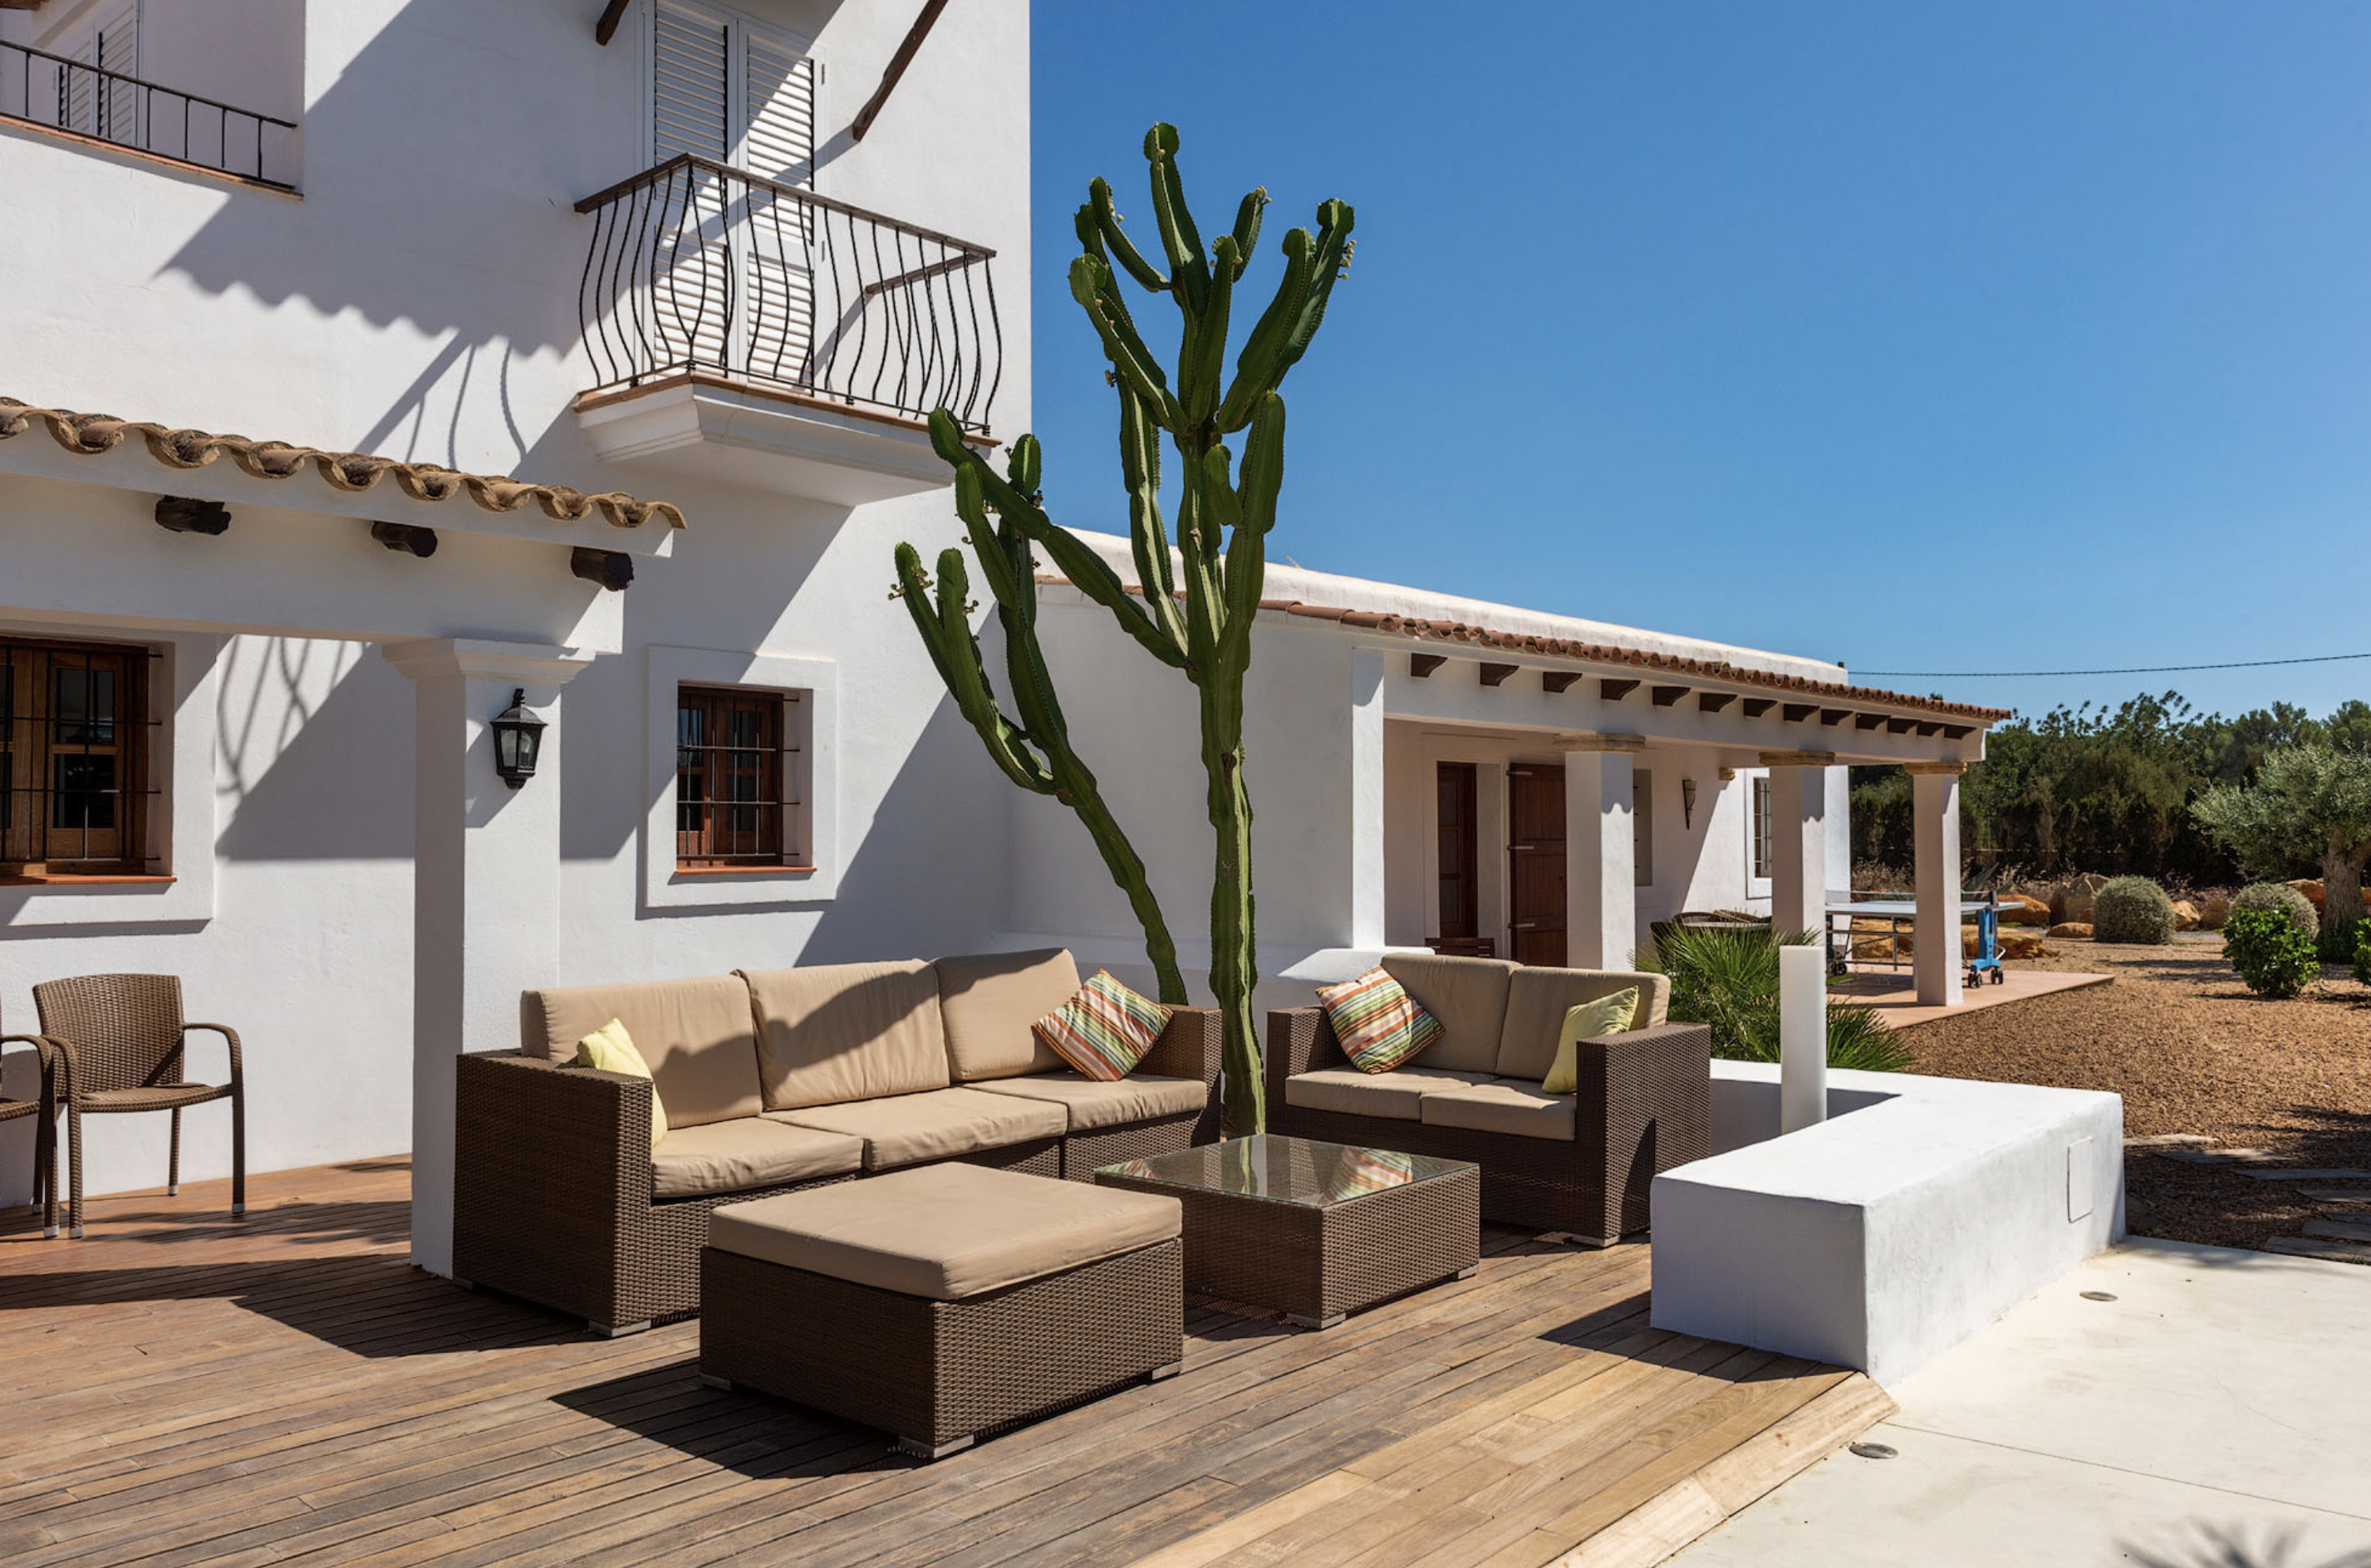 resa estates ibiza for rent villa santa eulalia 2021 can cosmi family house private pool terrace and house.jpg